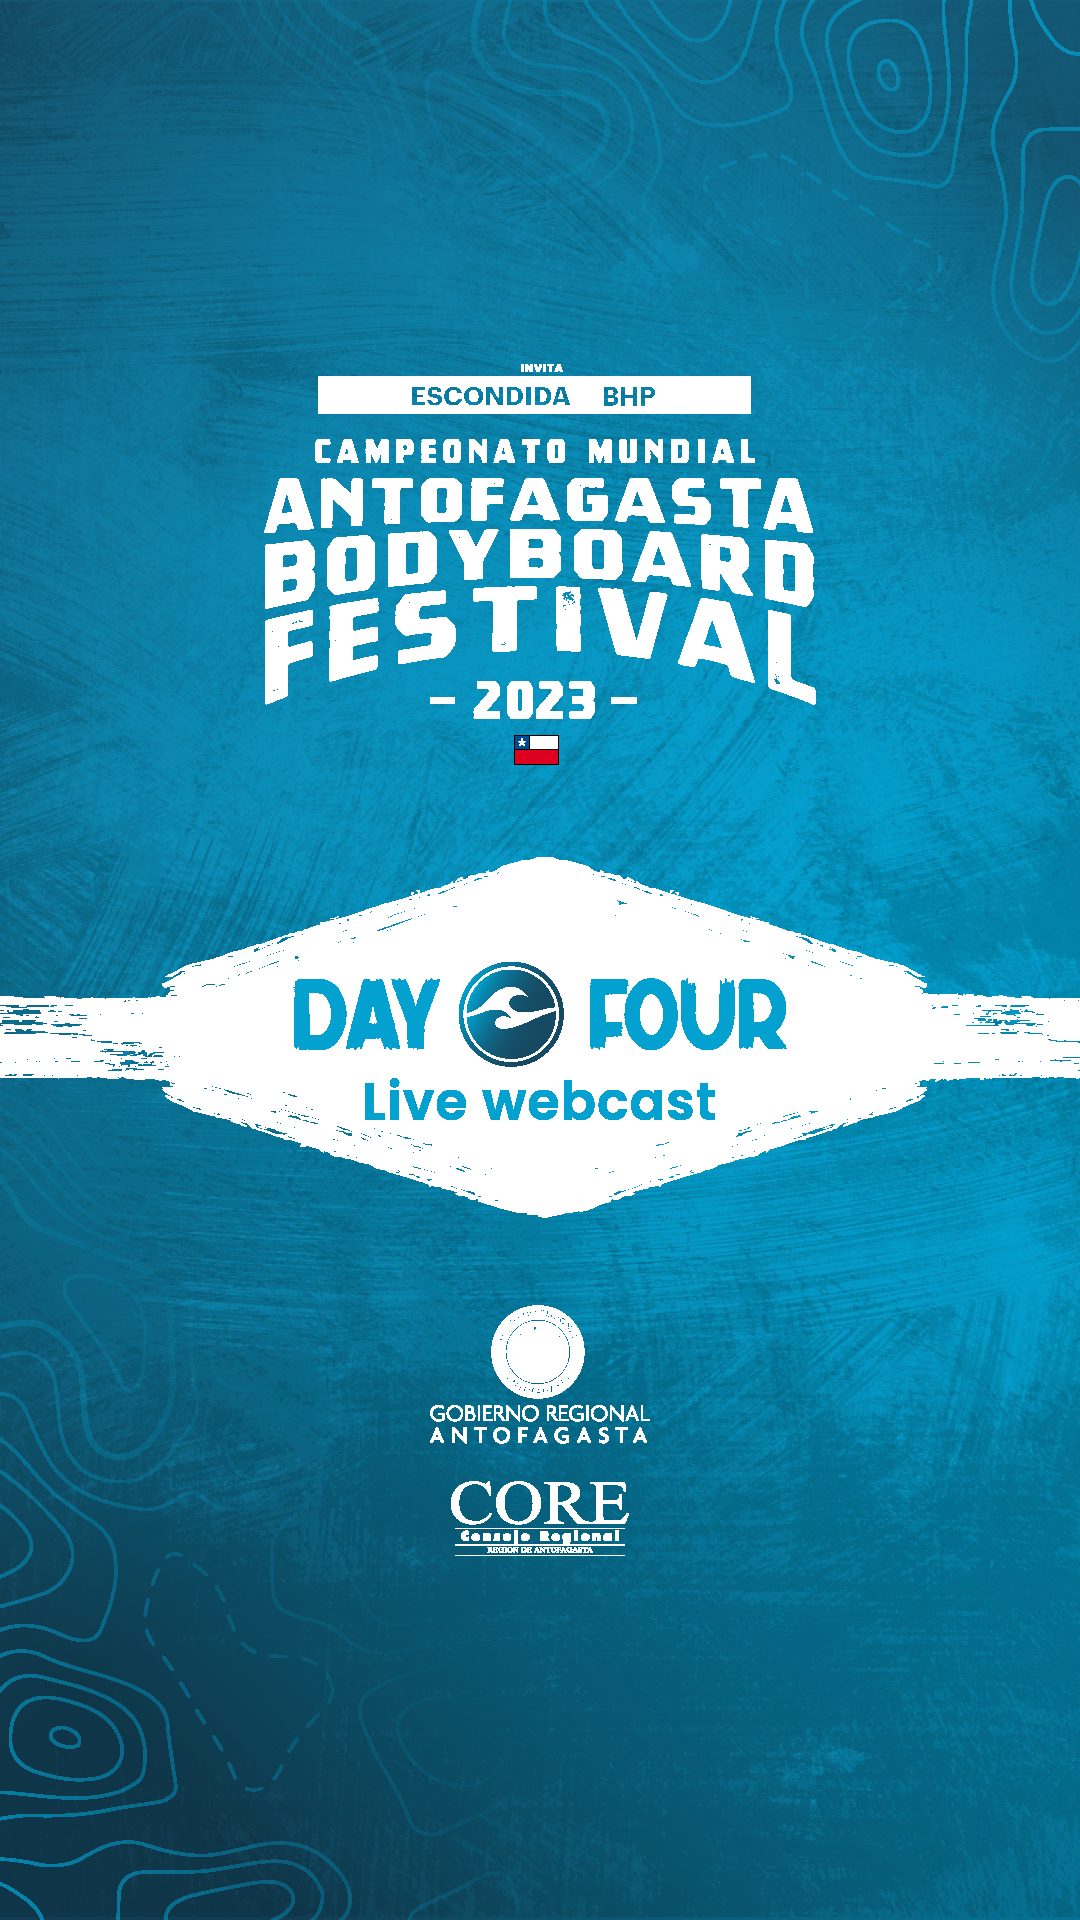 Antofagasta Bodyboard Festival 2023 IBC Live Stream Day 4 IBC World